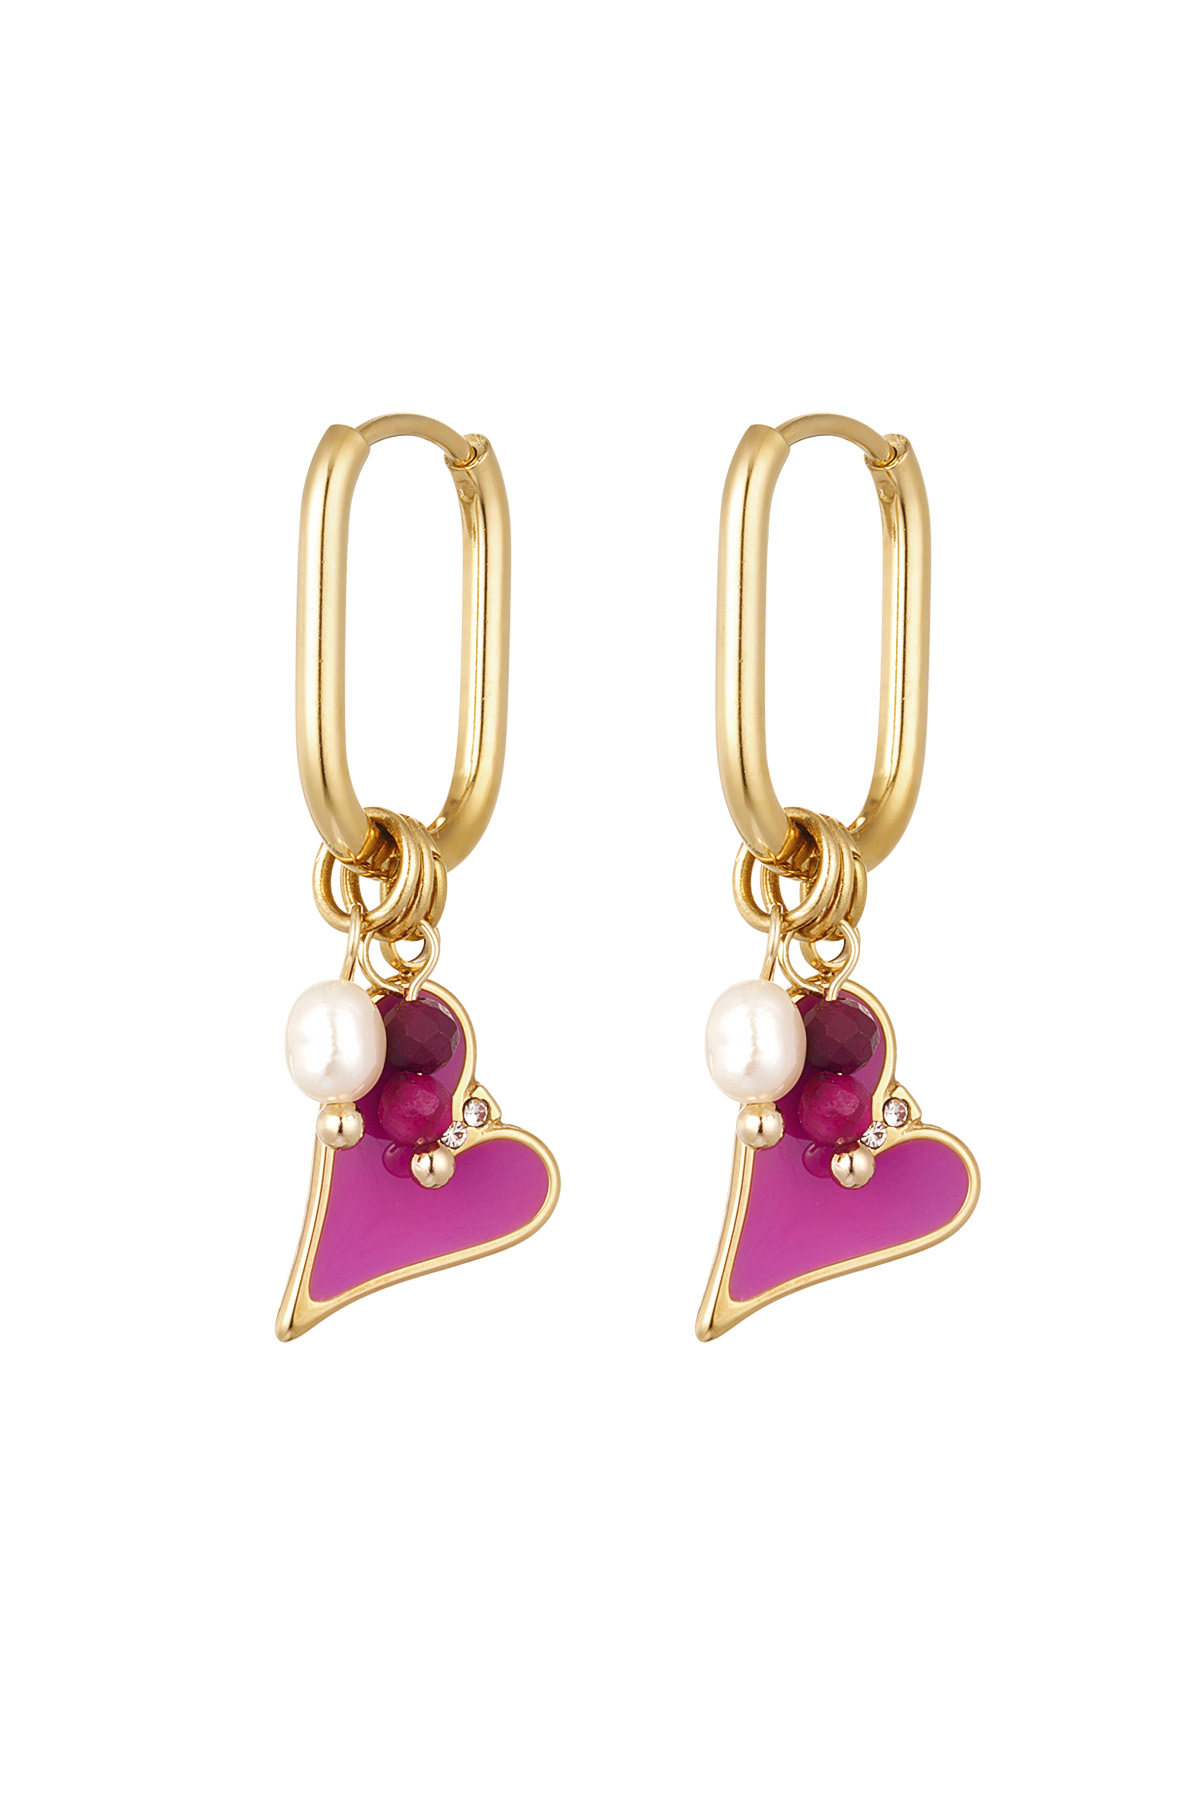 Ohrringe farbiges Herz mit Perle - Gold/Rosa h5 